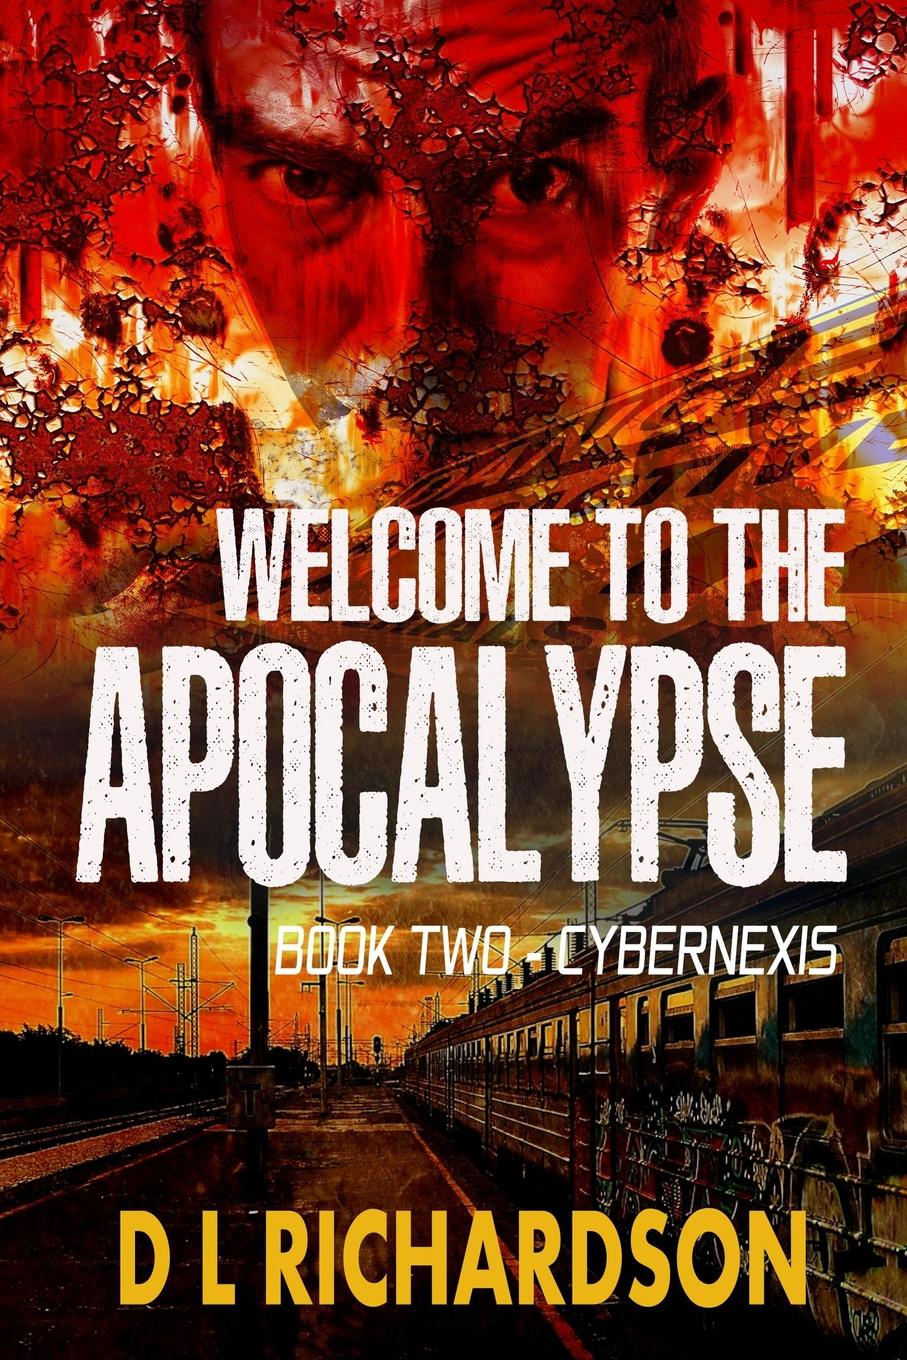 фото Welcome to the Apocalypse - Cybernexis